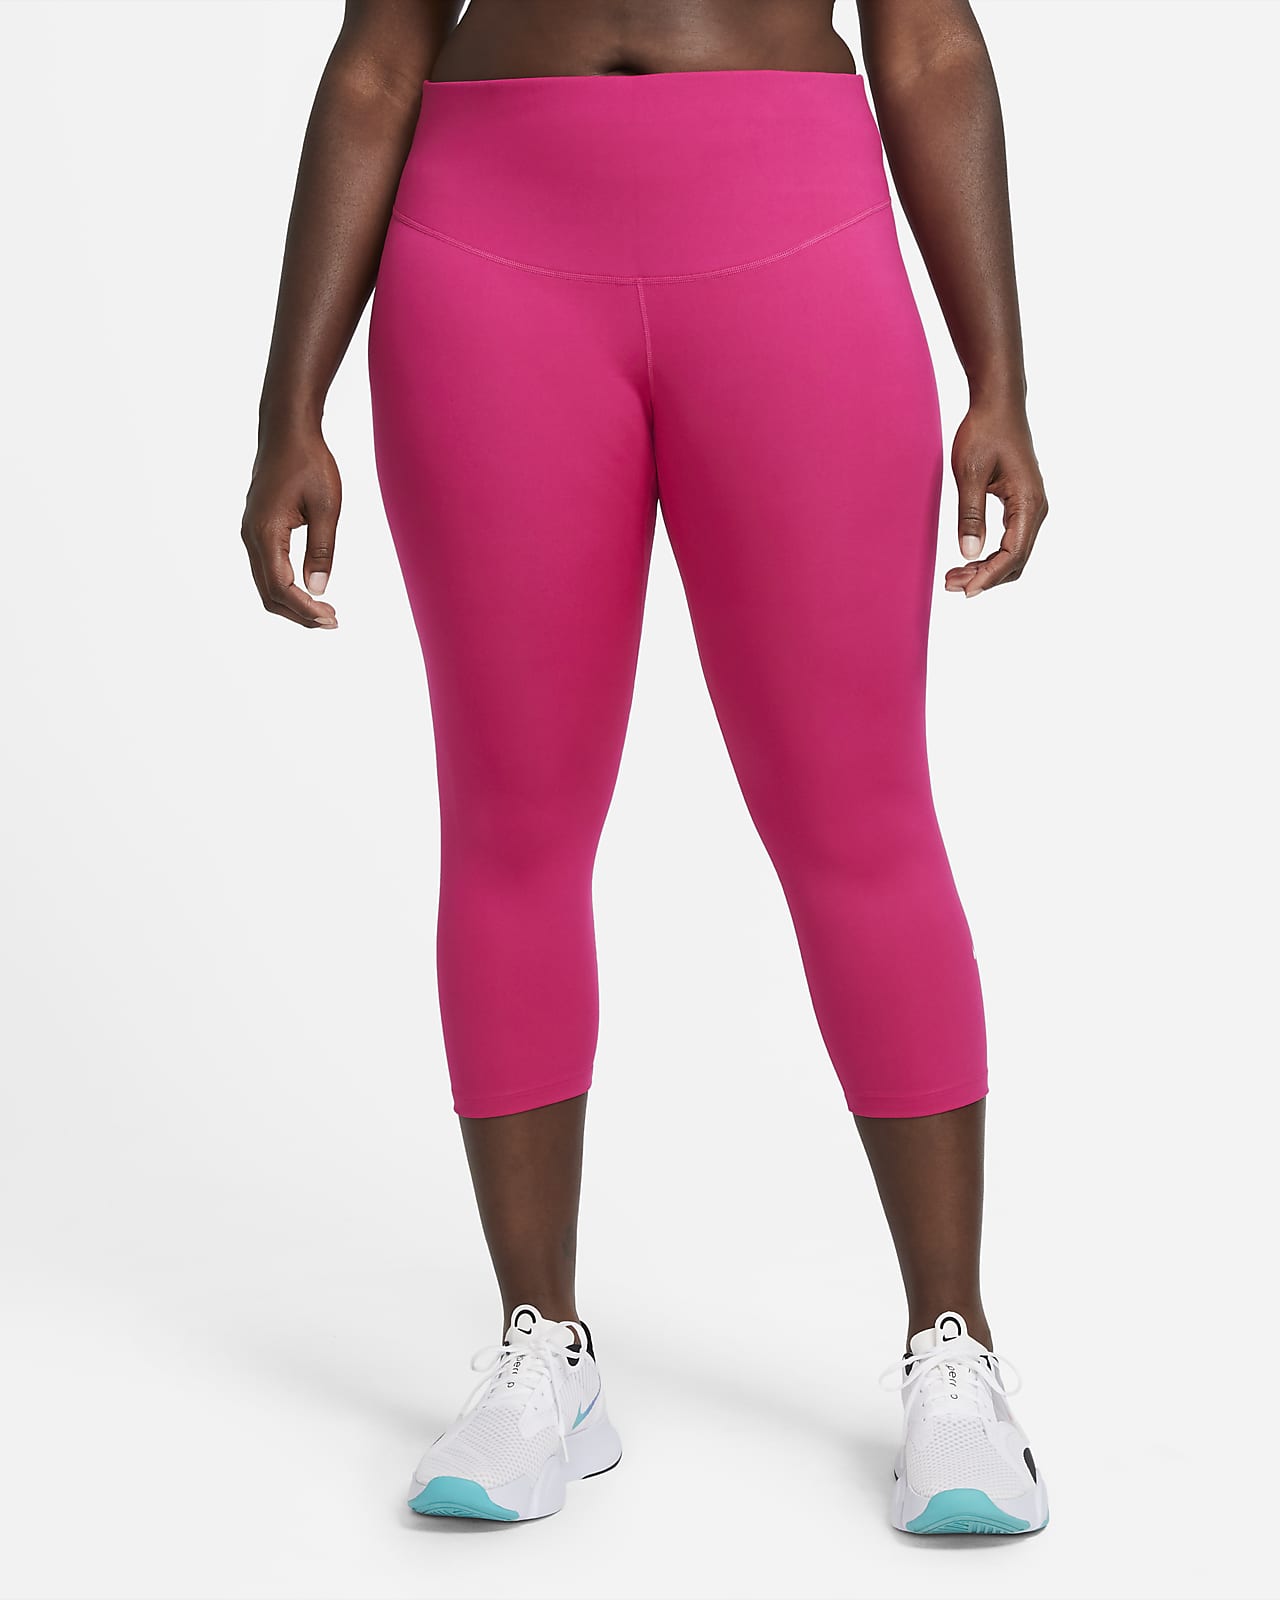 Nike Women's Pro Cropped Leggings-Plus Size